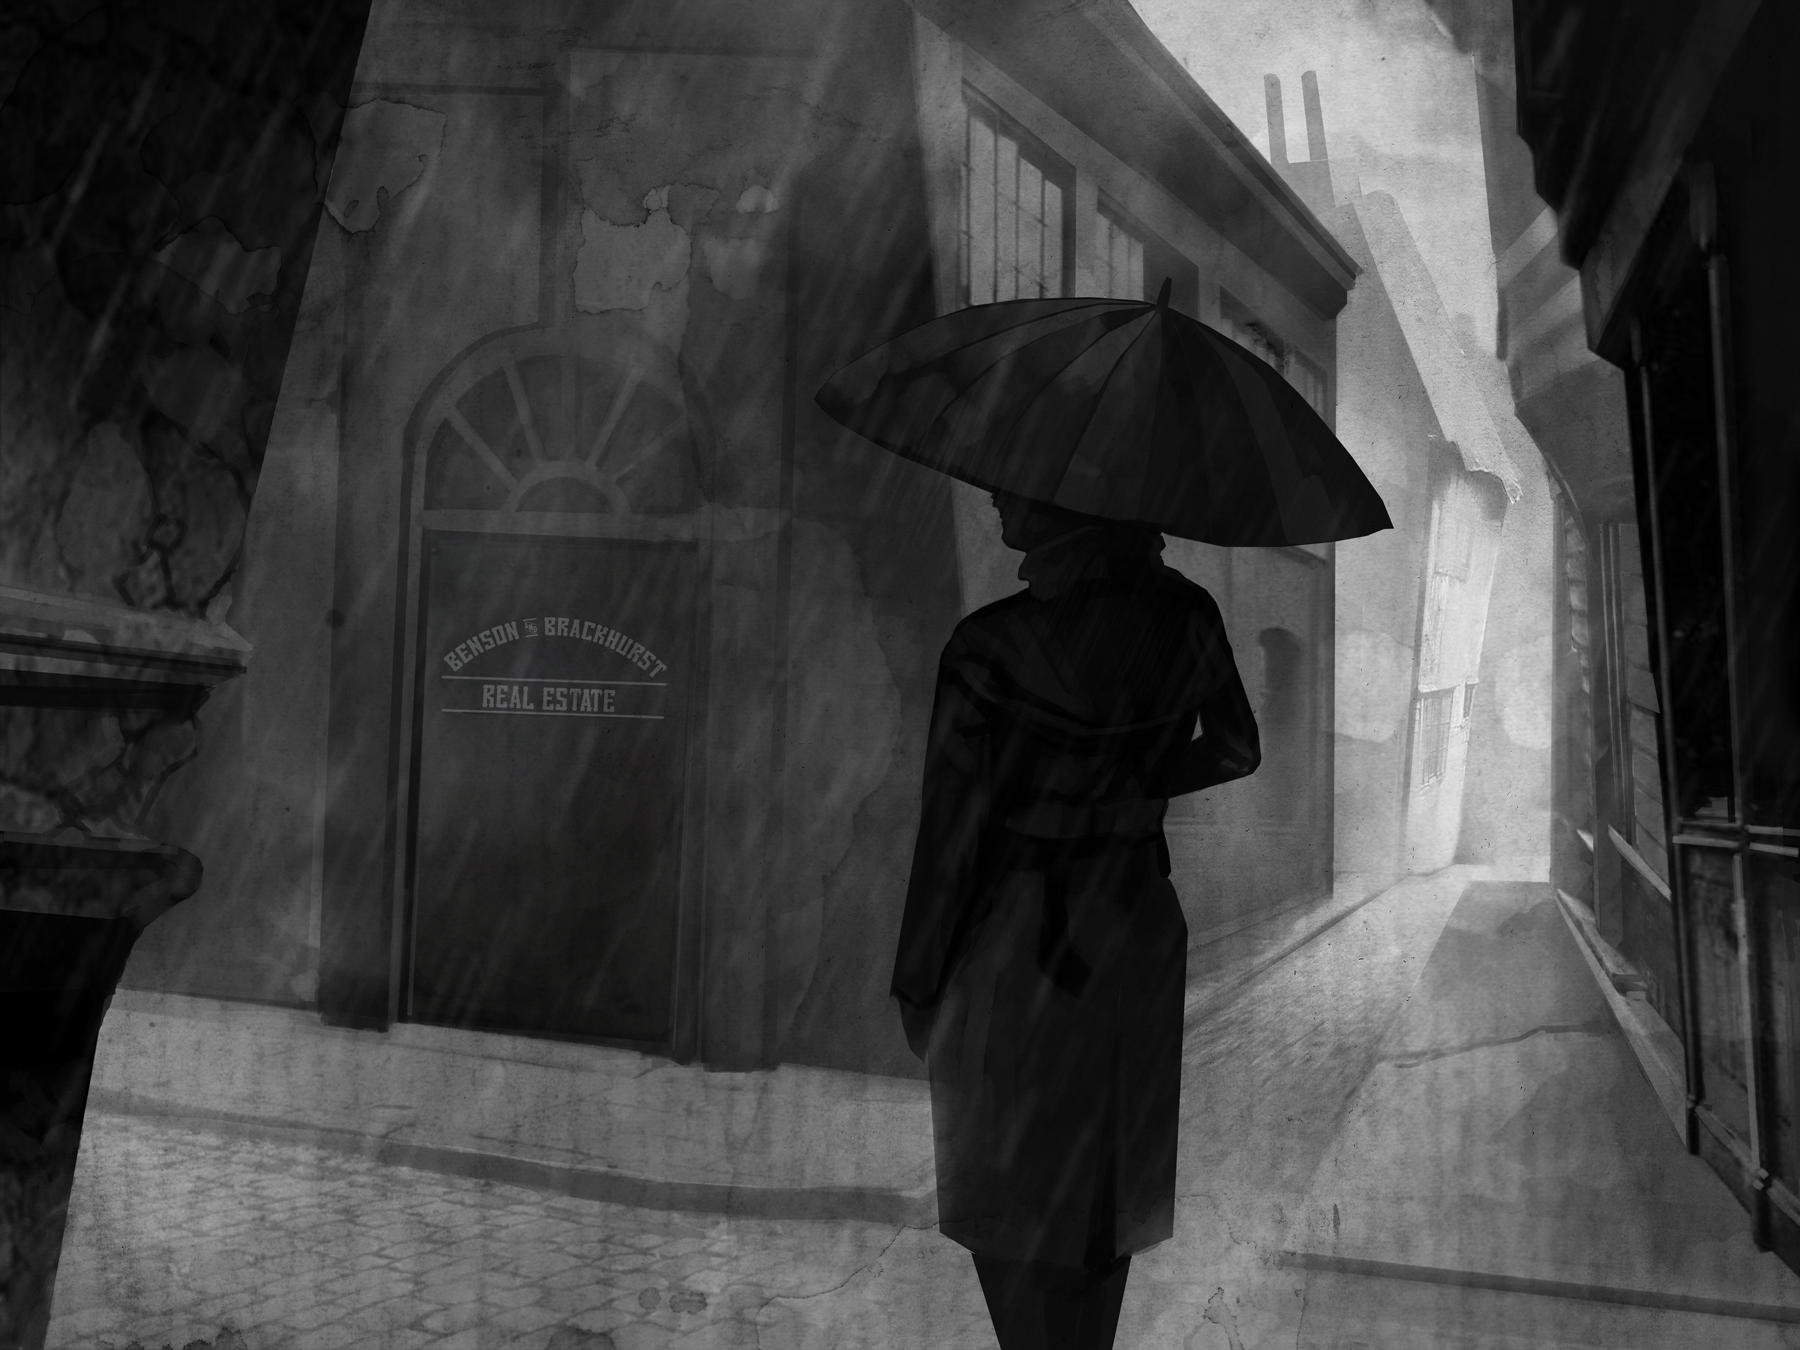 A figure stands beneath an umbrella in a rainy street